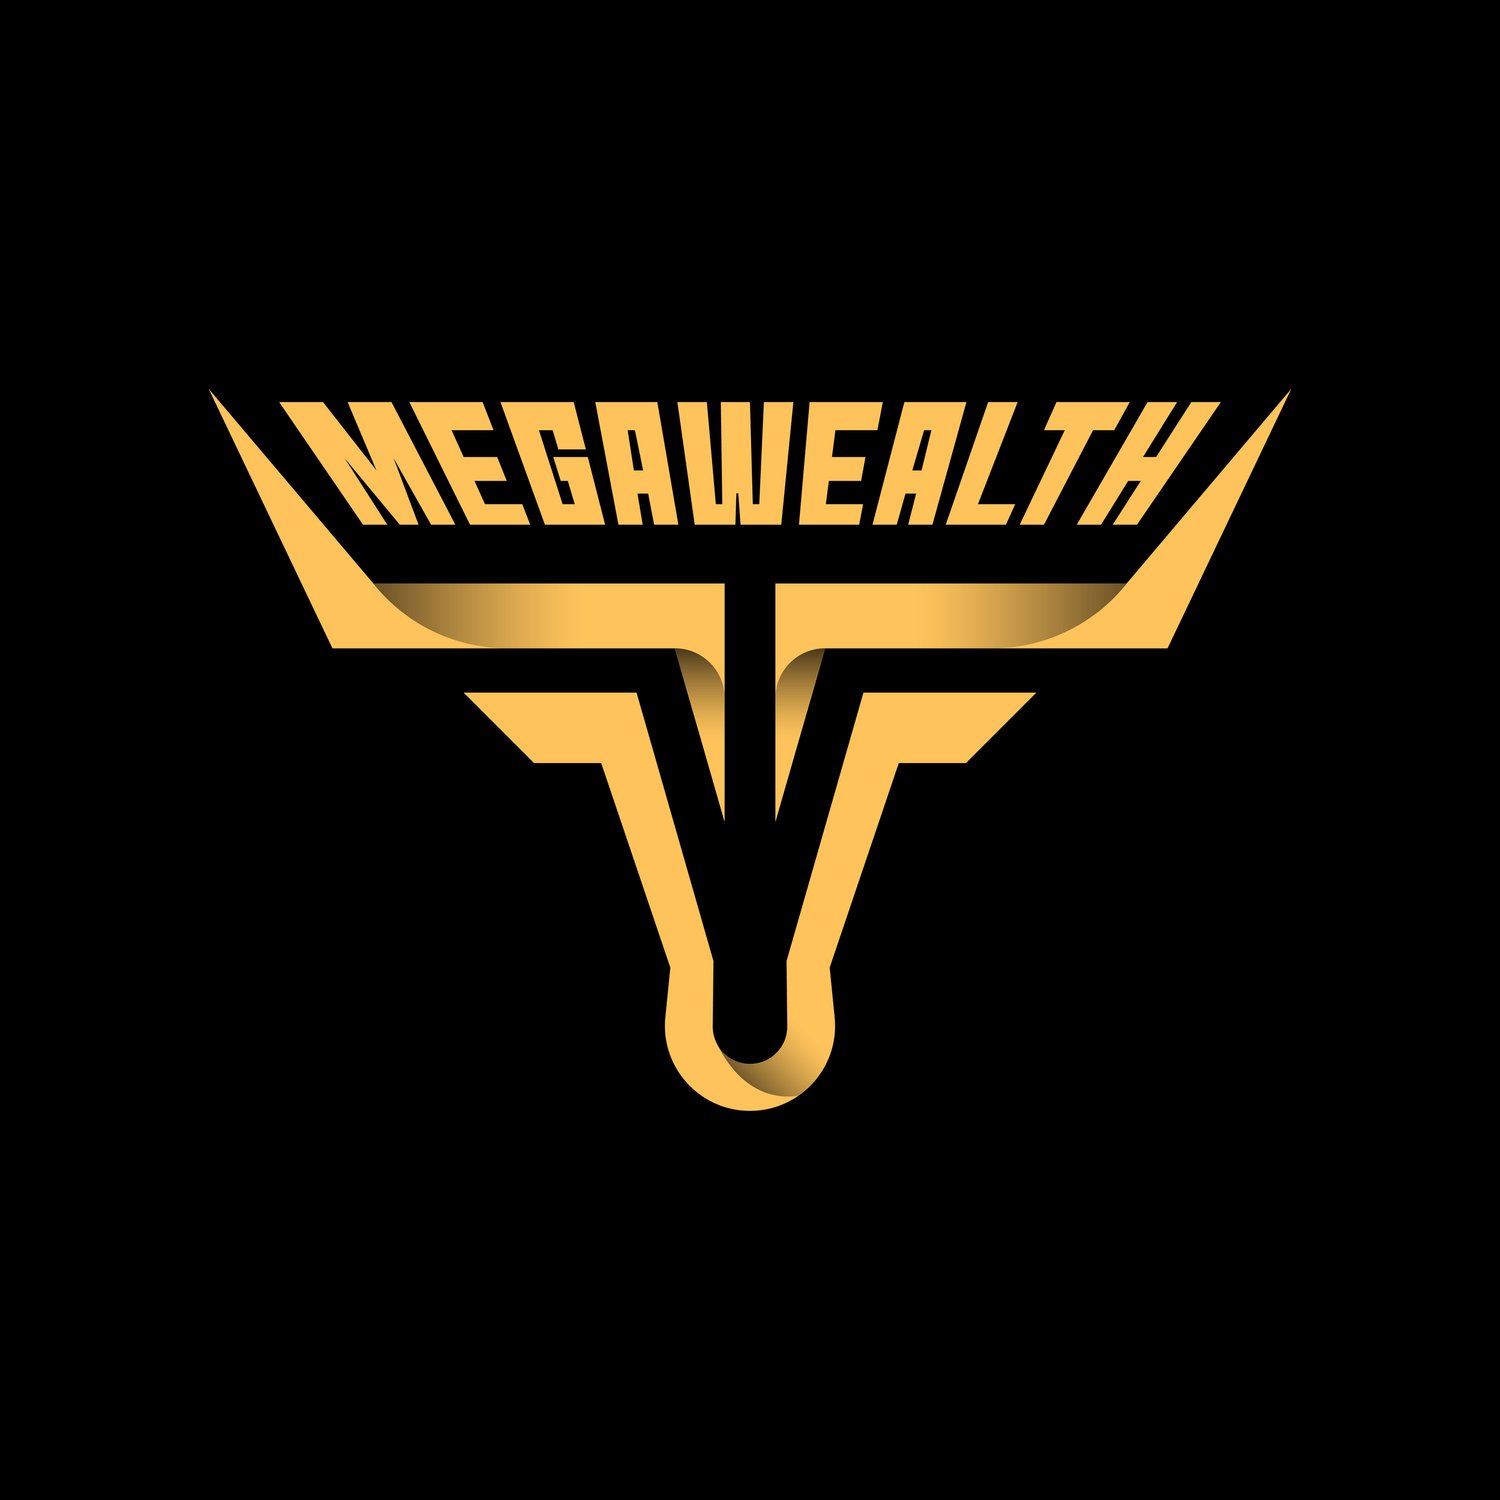 MegaWealth